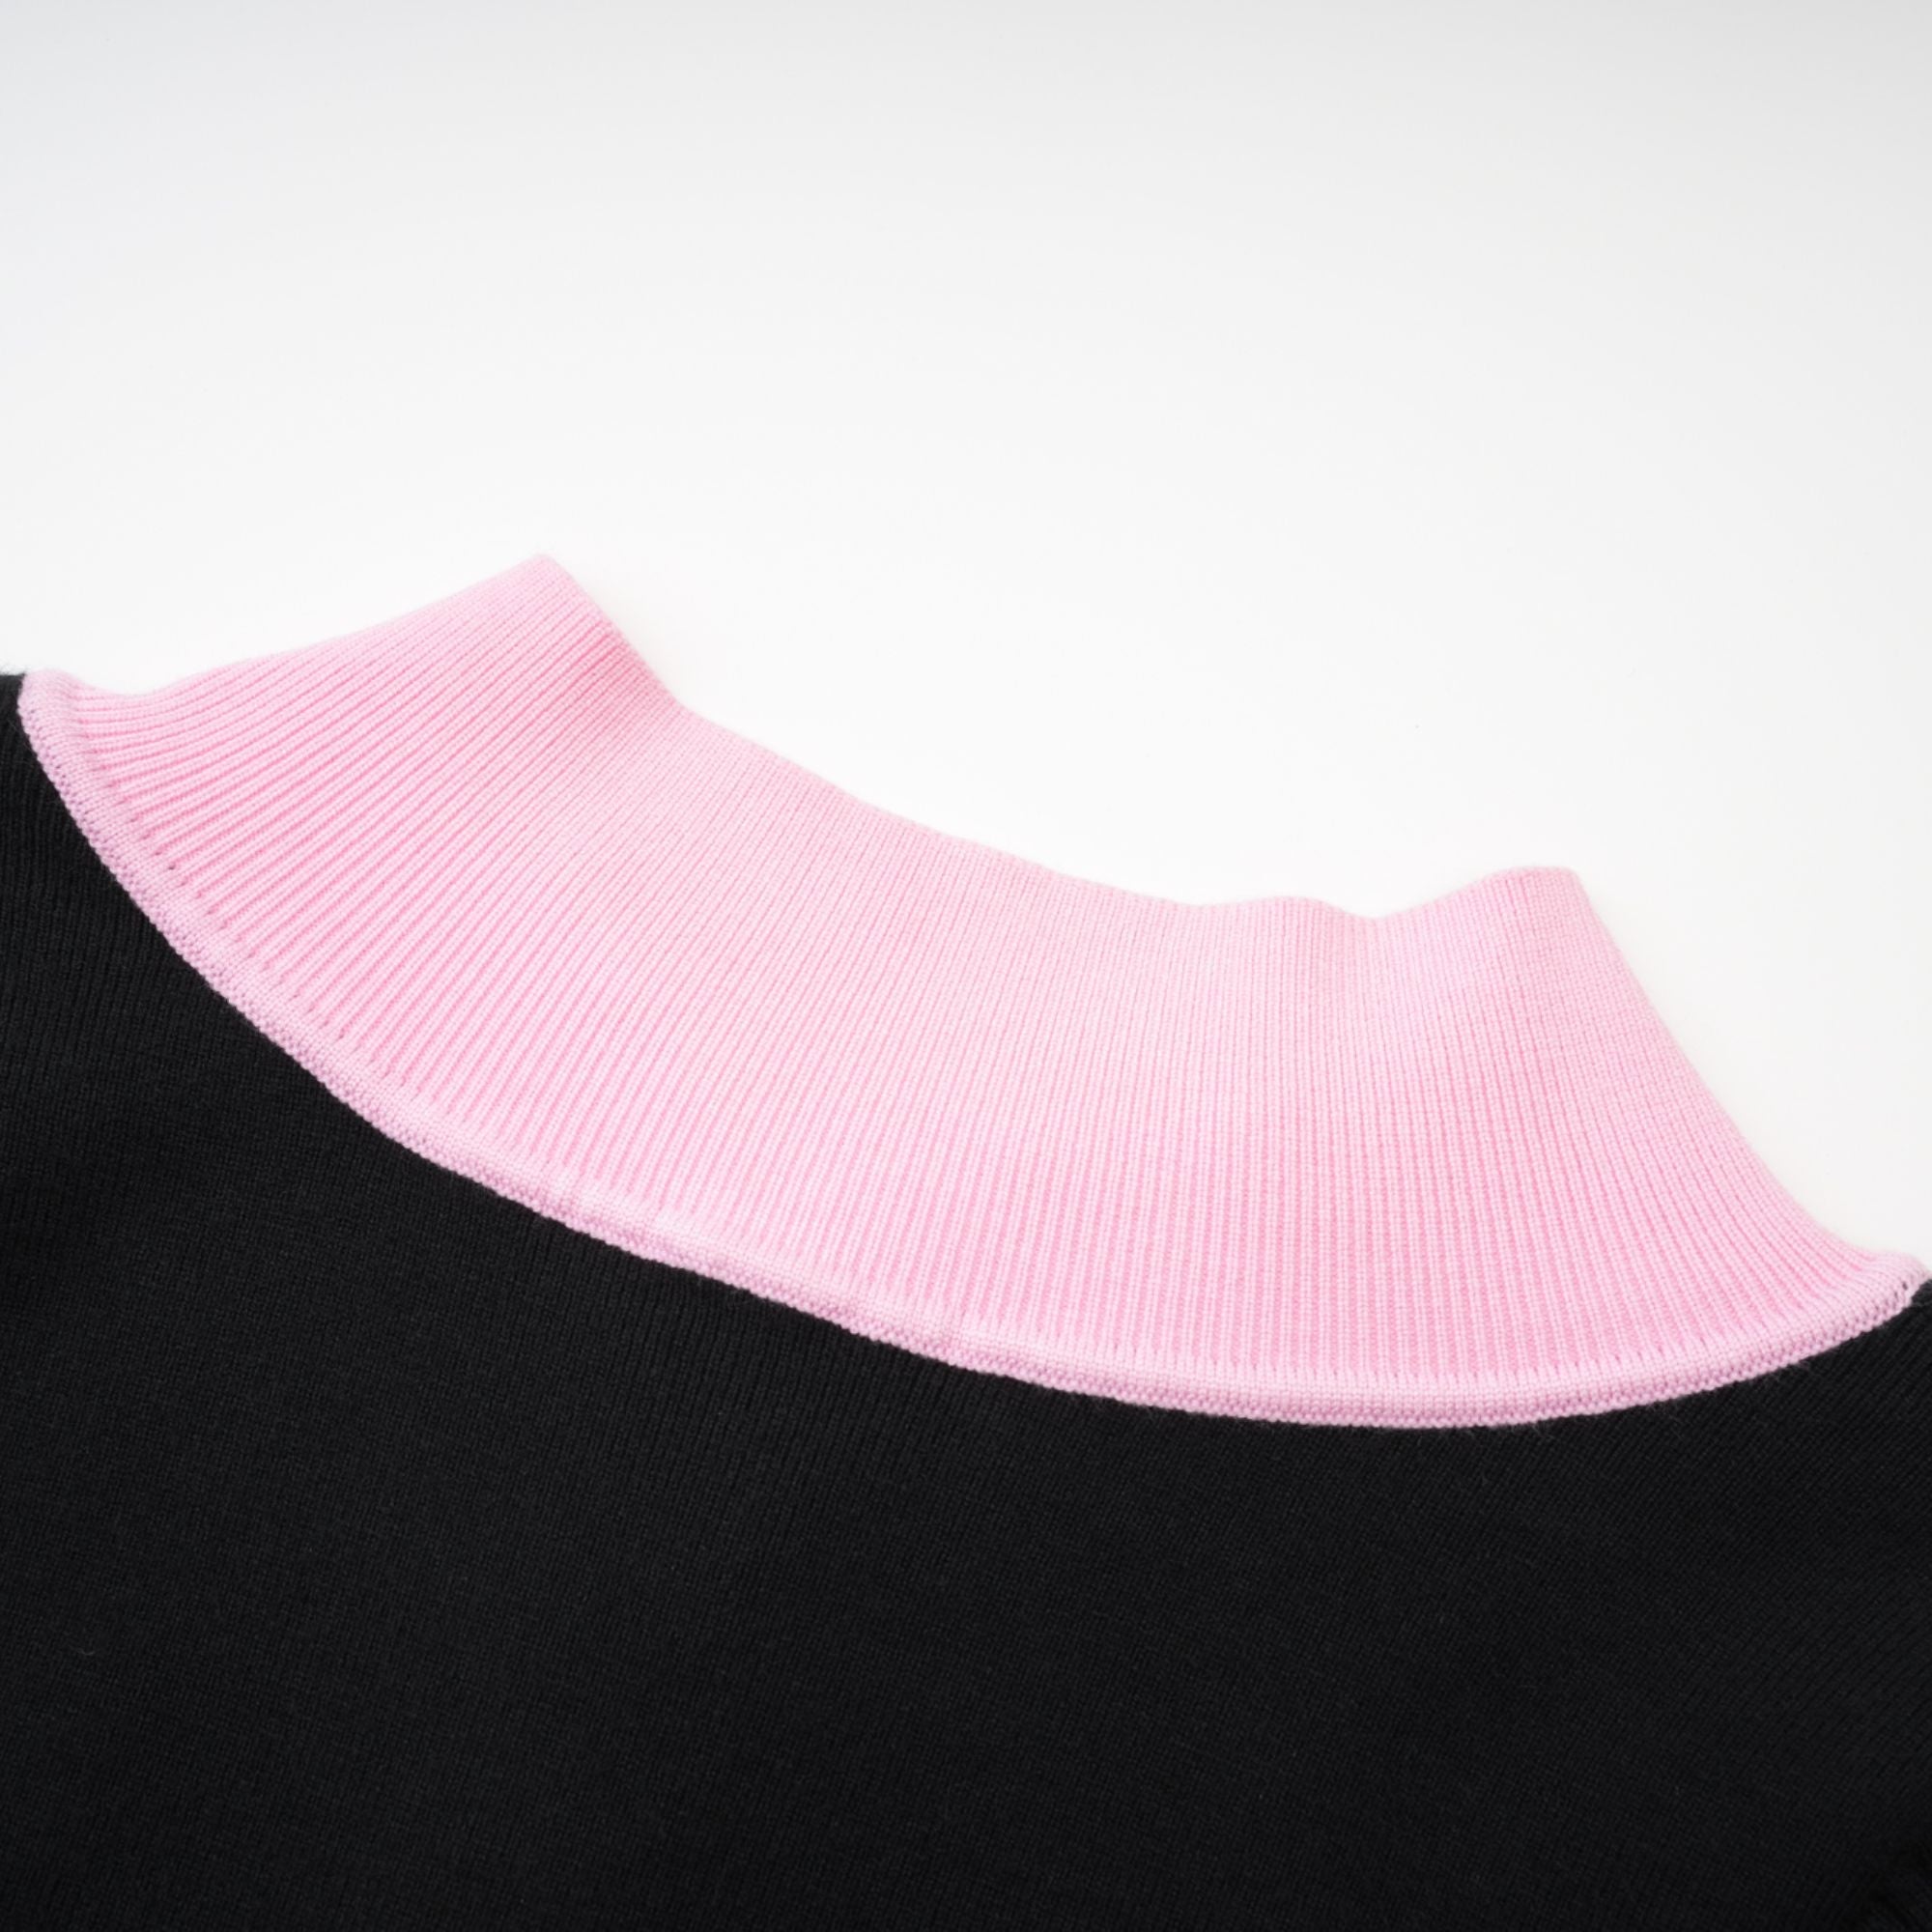 Ondinea knitted jumpsuit - Miss Rosier - Women's Online Boutique